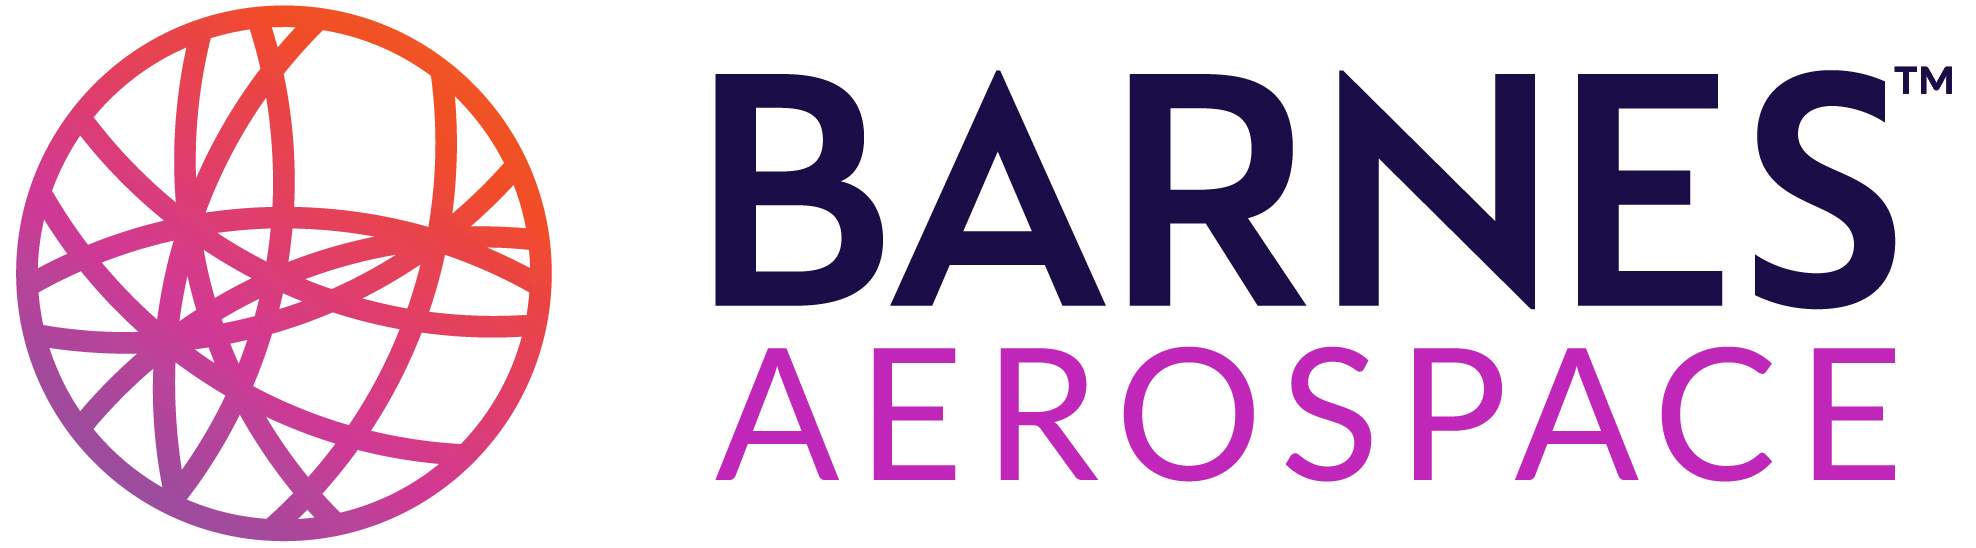 Barnes Aerospace Windsor Division logo